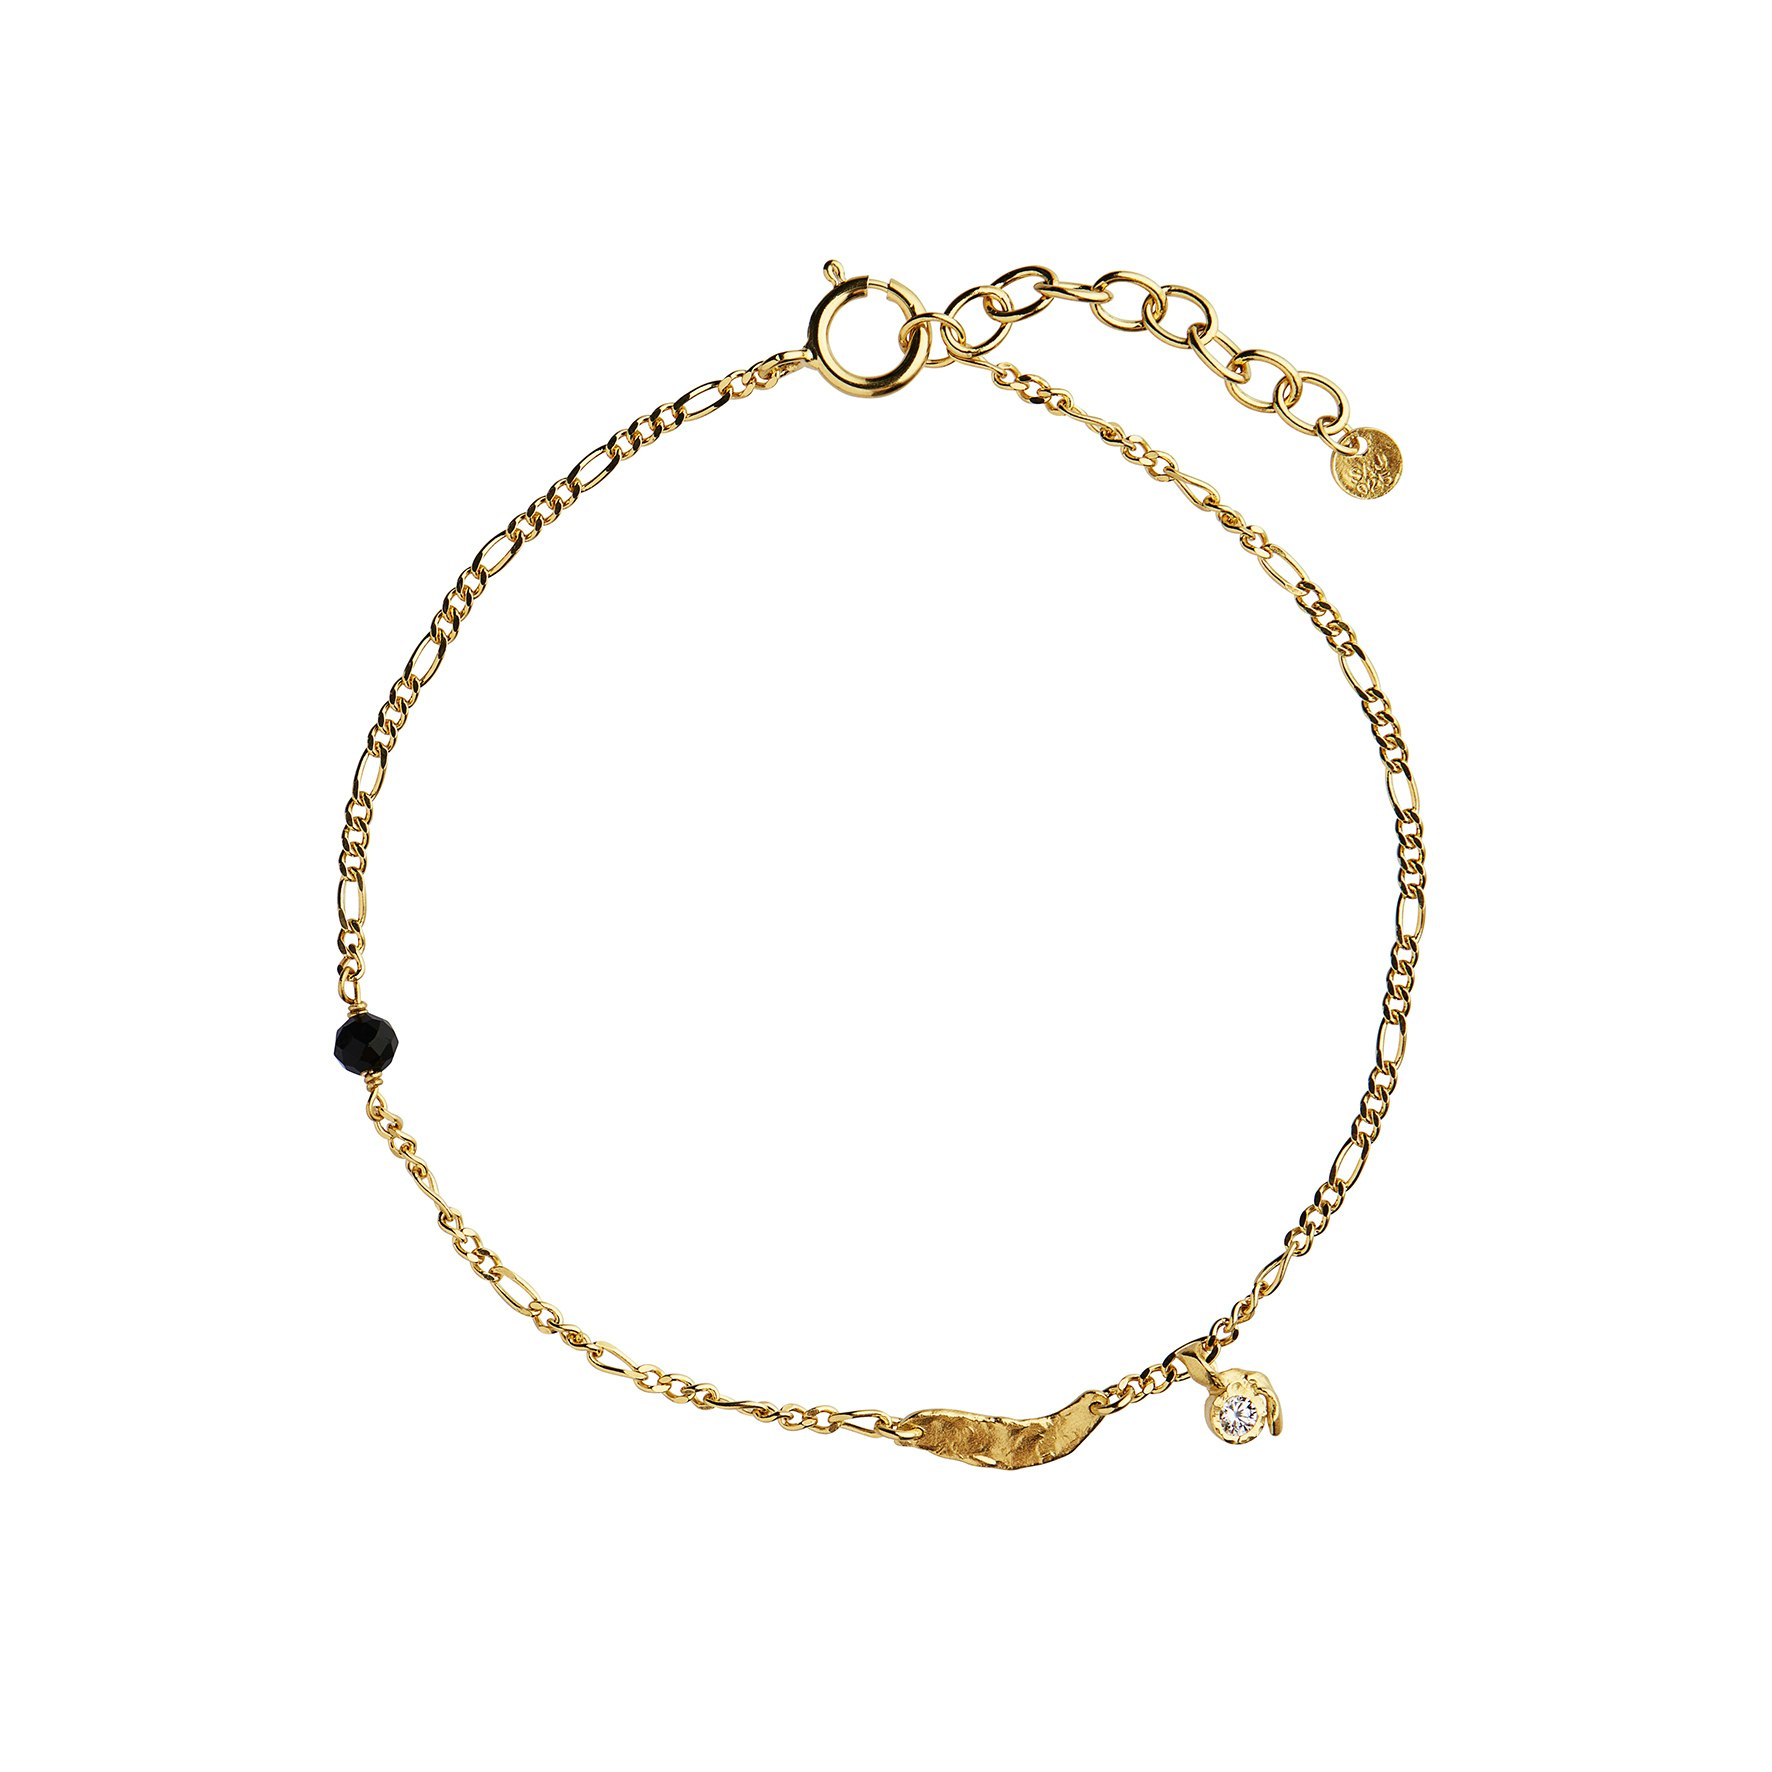 Flow Splash Bracelet With Stones fra STINE A Jewelry i Forgylt-Sølv Sterling 925